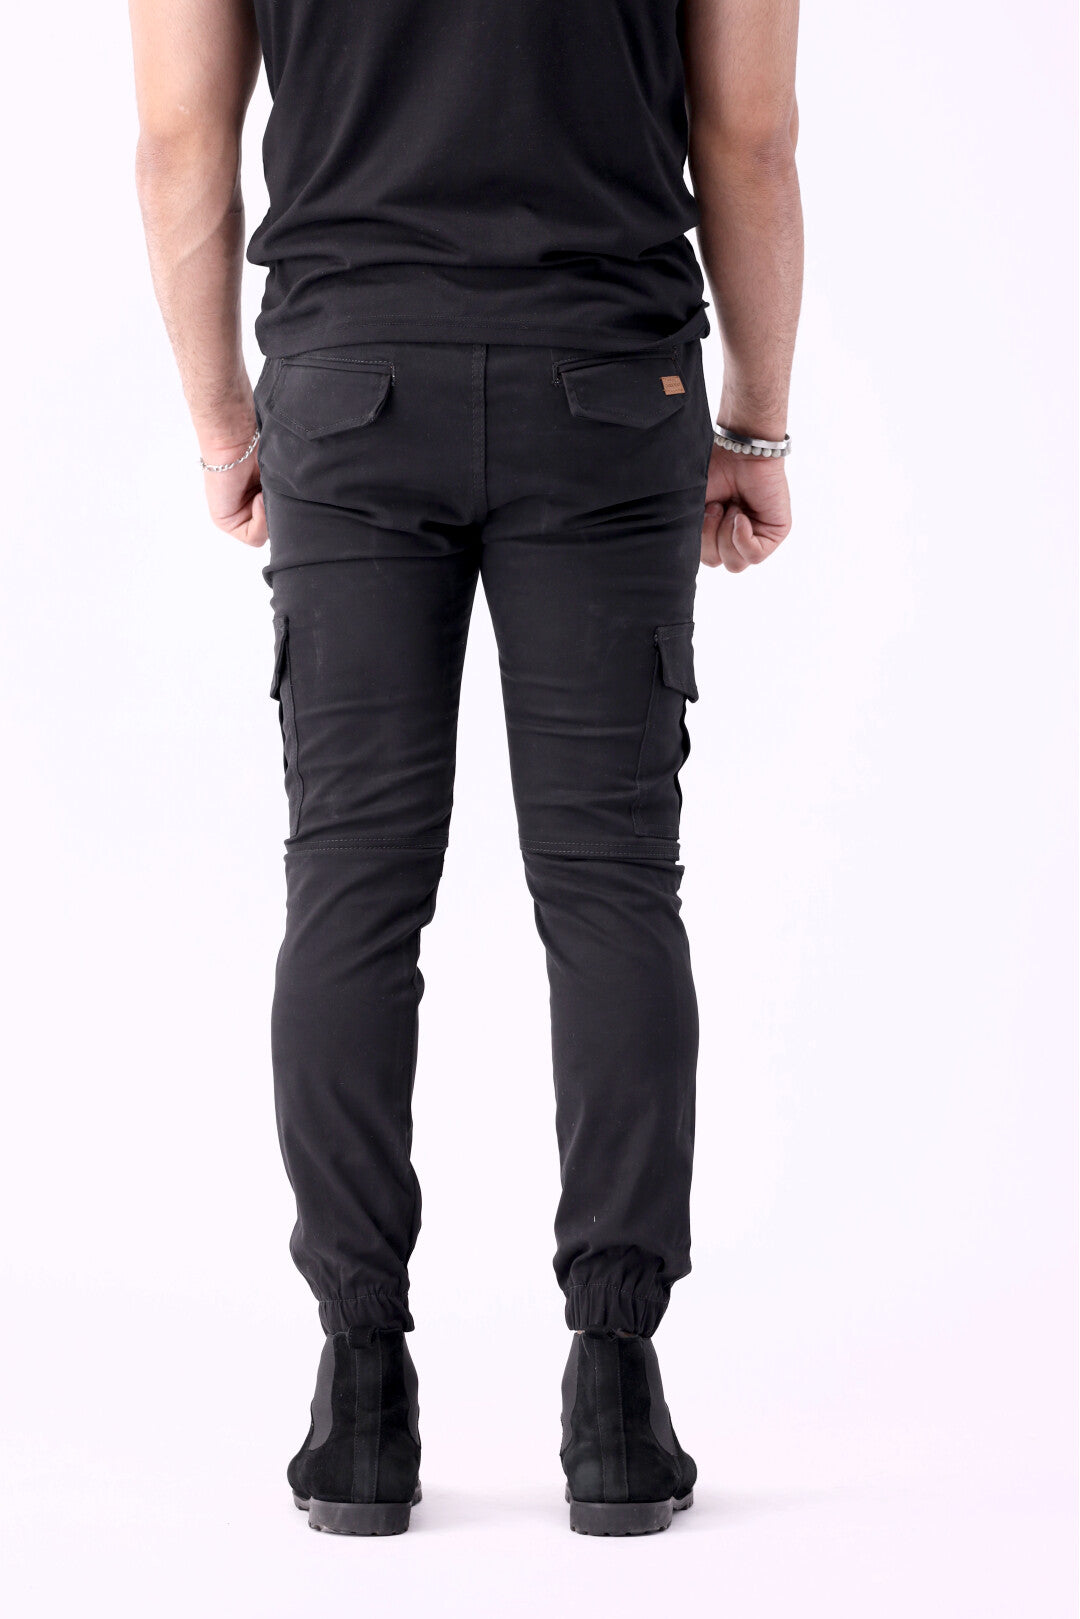 Men's Black Lightweight Six Pocket Cargo Trousers, 6 Pocket Cargo Pant